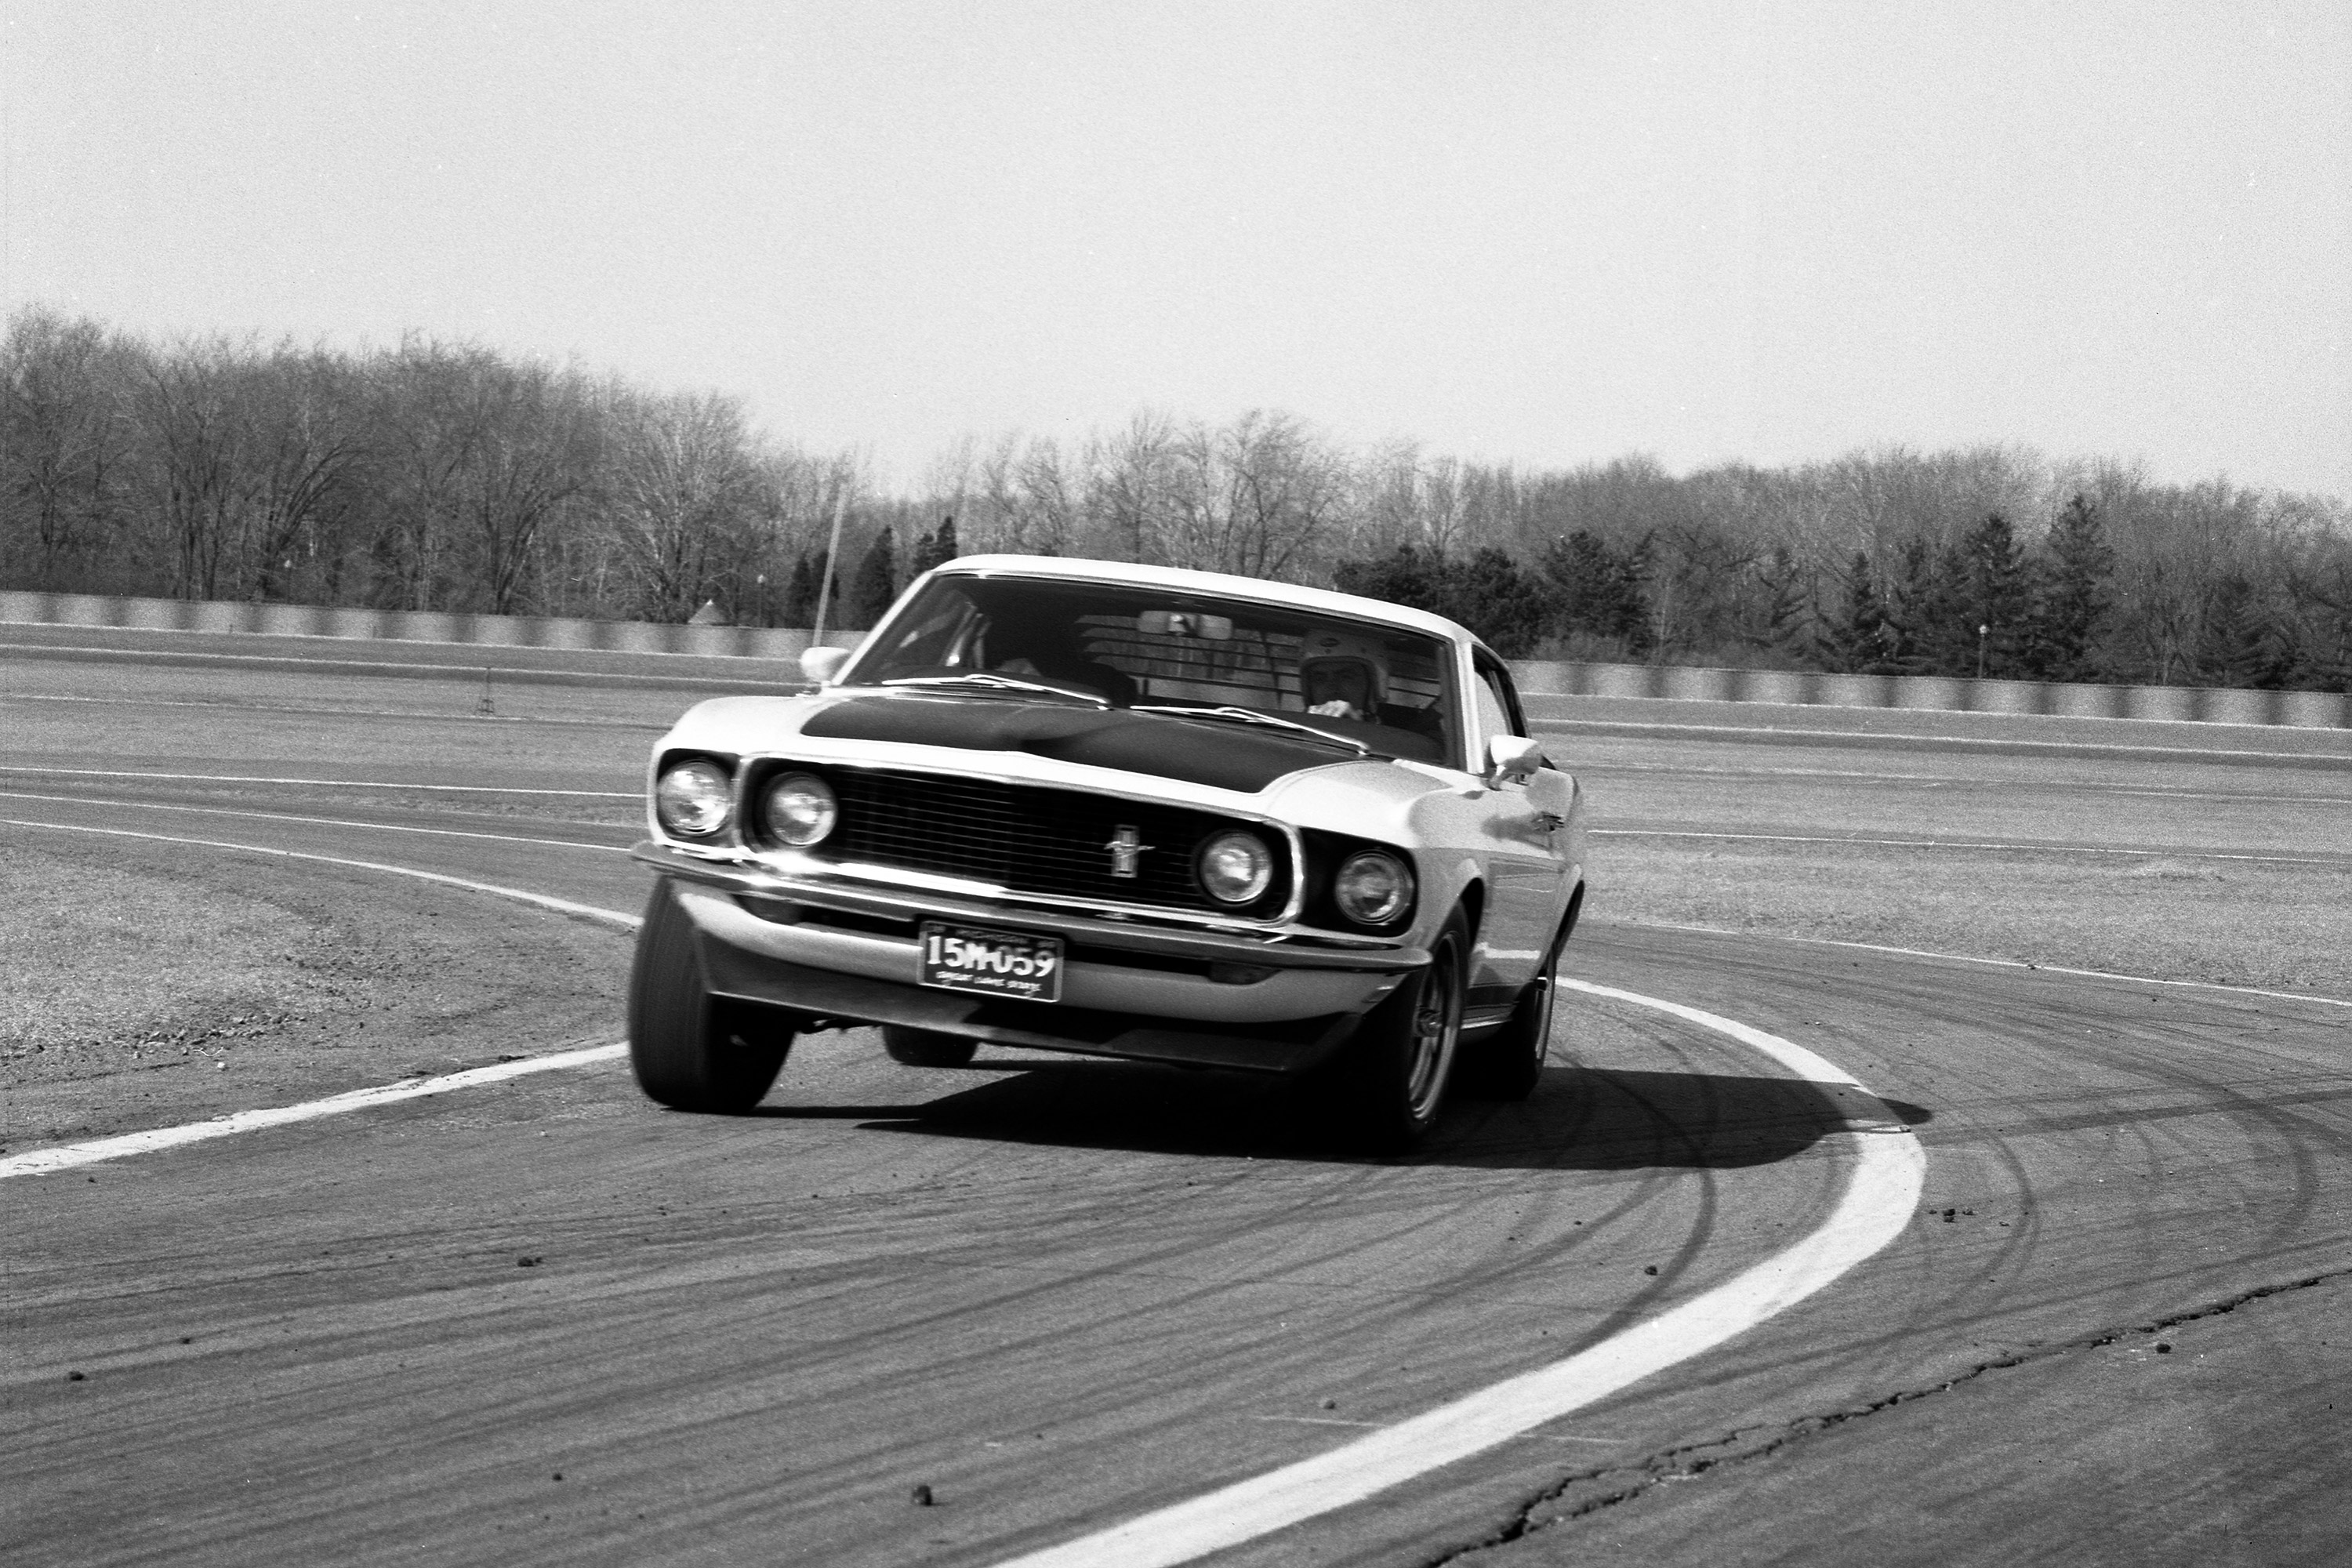  1969 Ford Mustang Boss 302 Wallpaper.